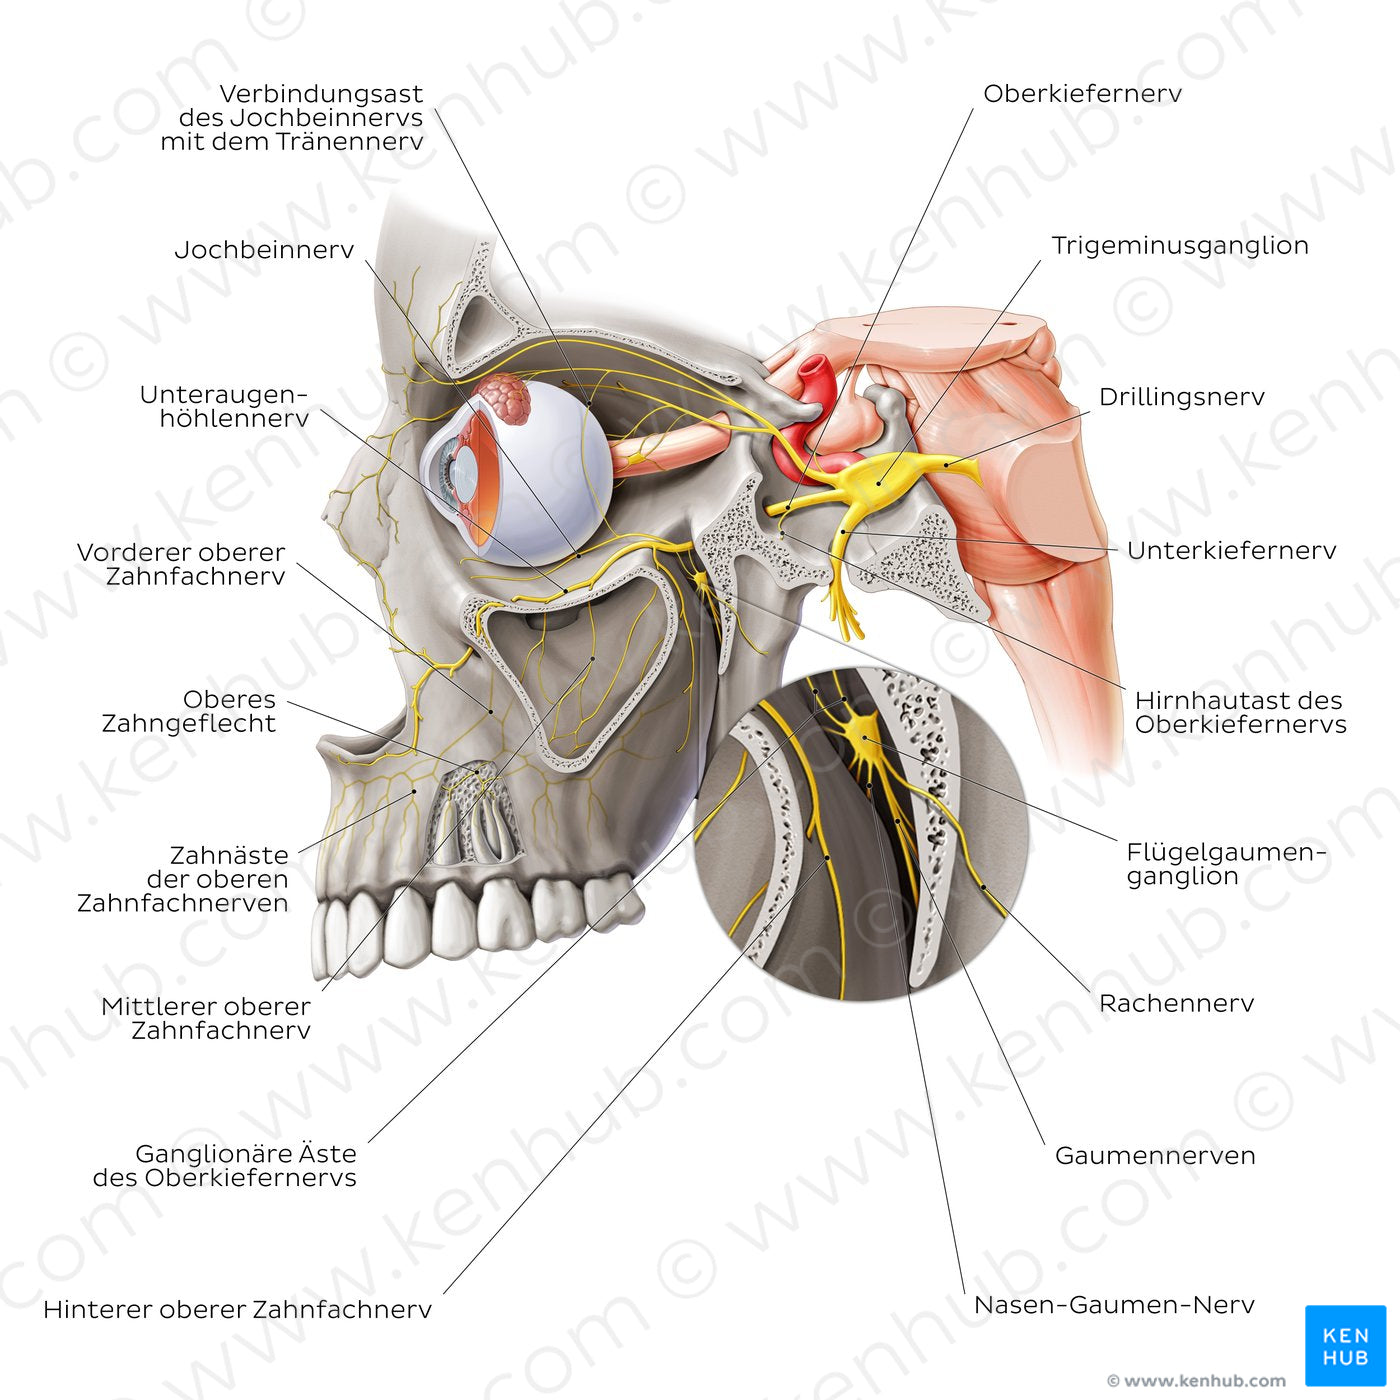 Maxillary nerve (German)